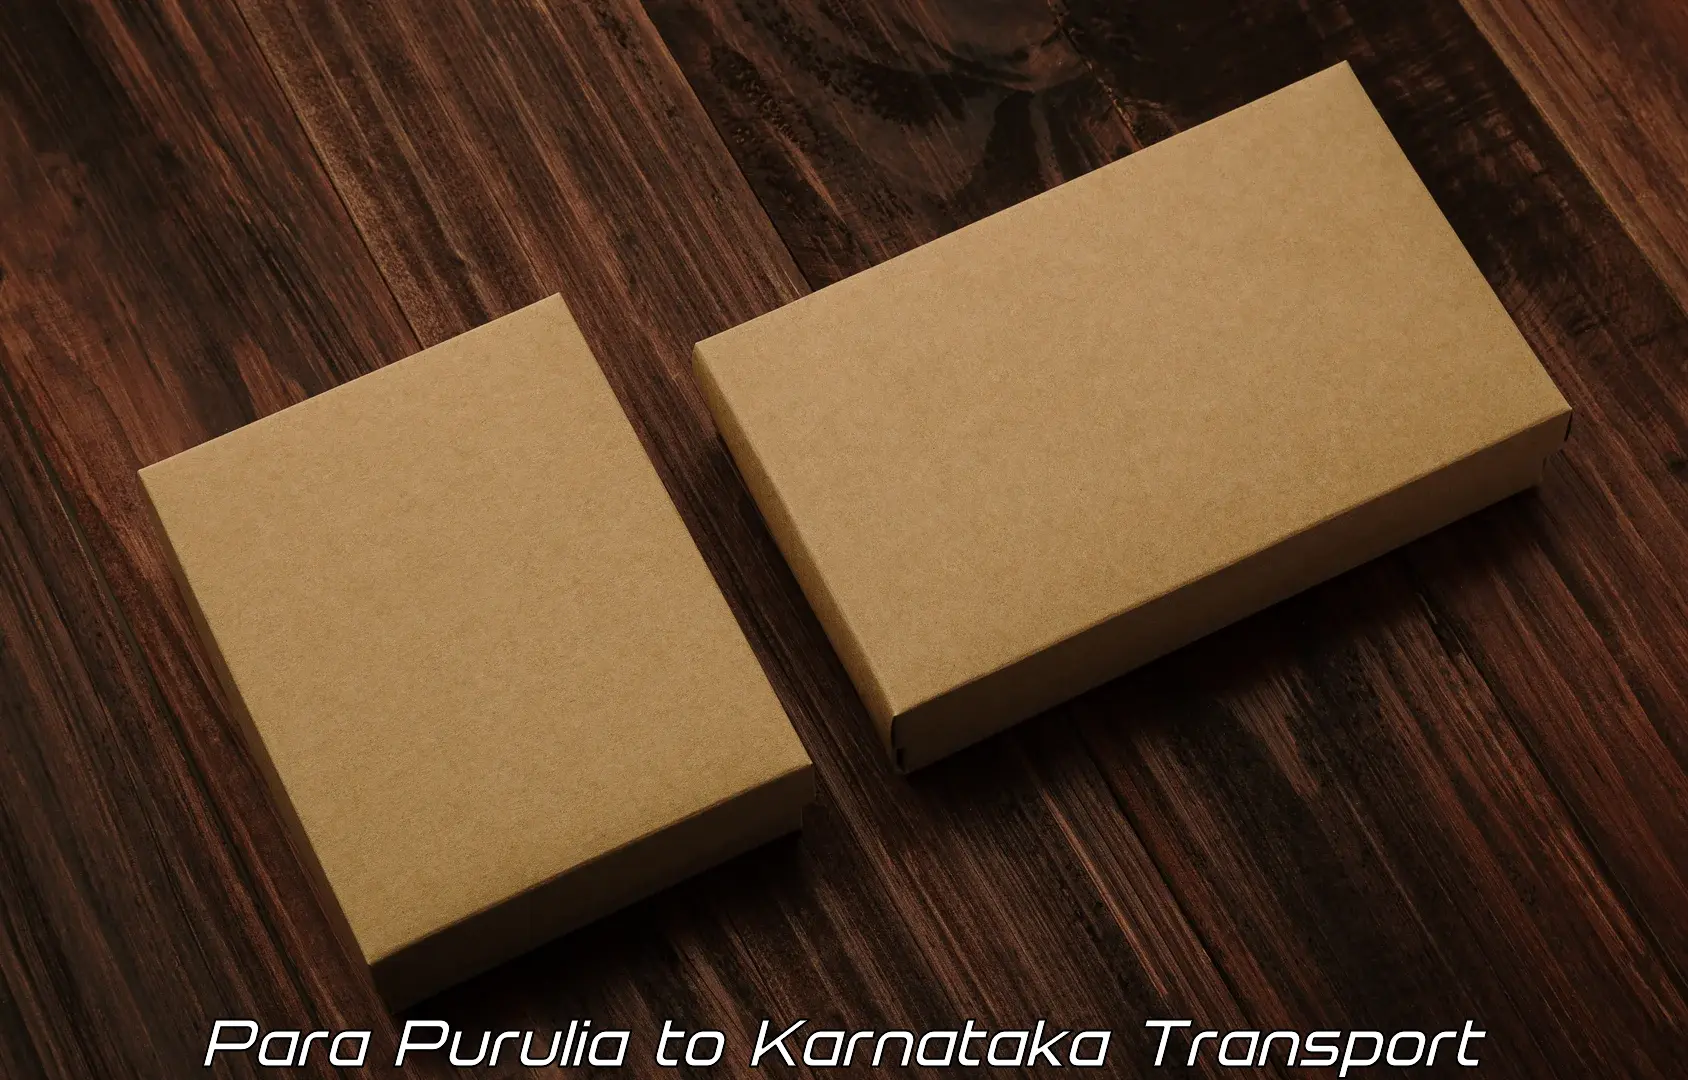 Two wheeler parcel service Para Purulia to Arsikere